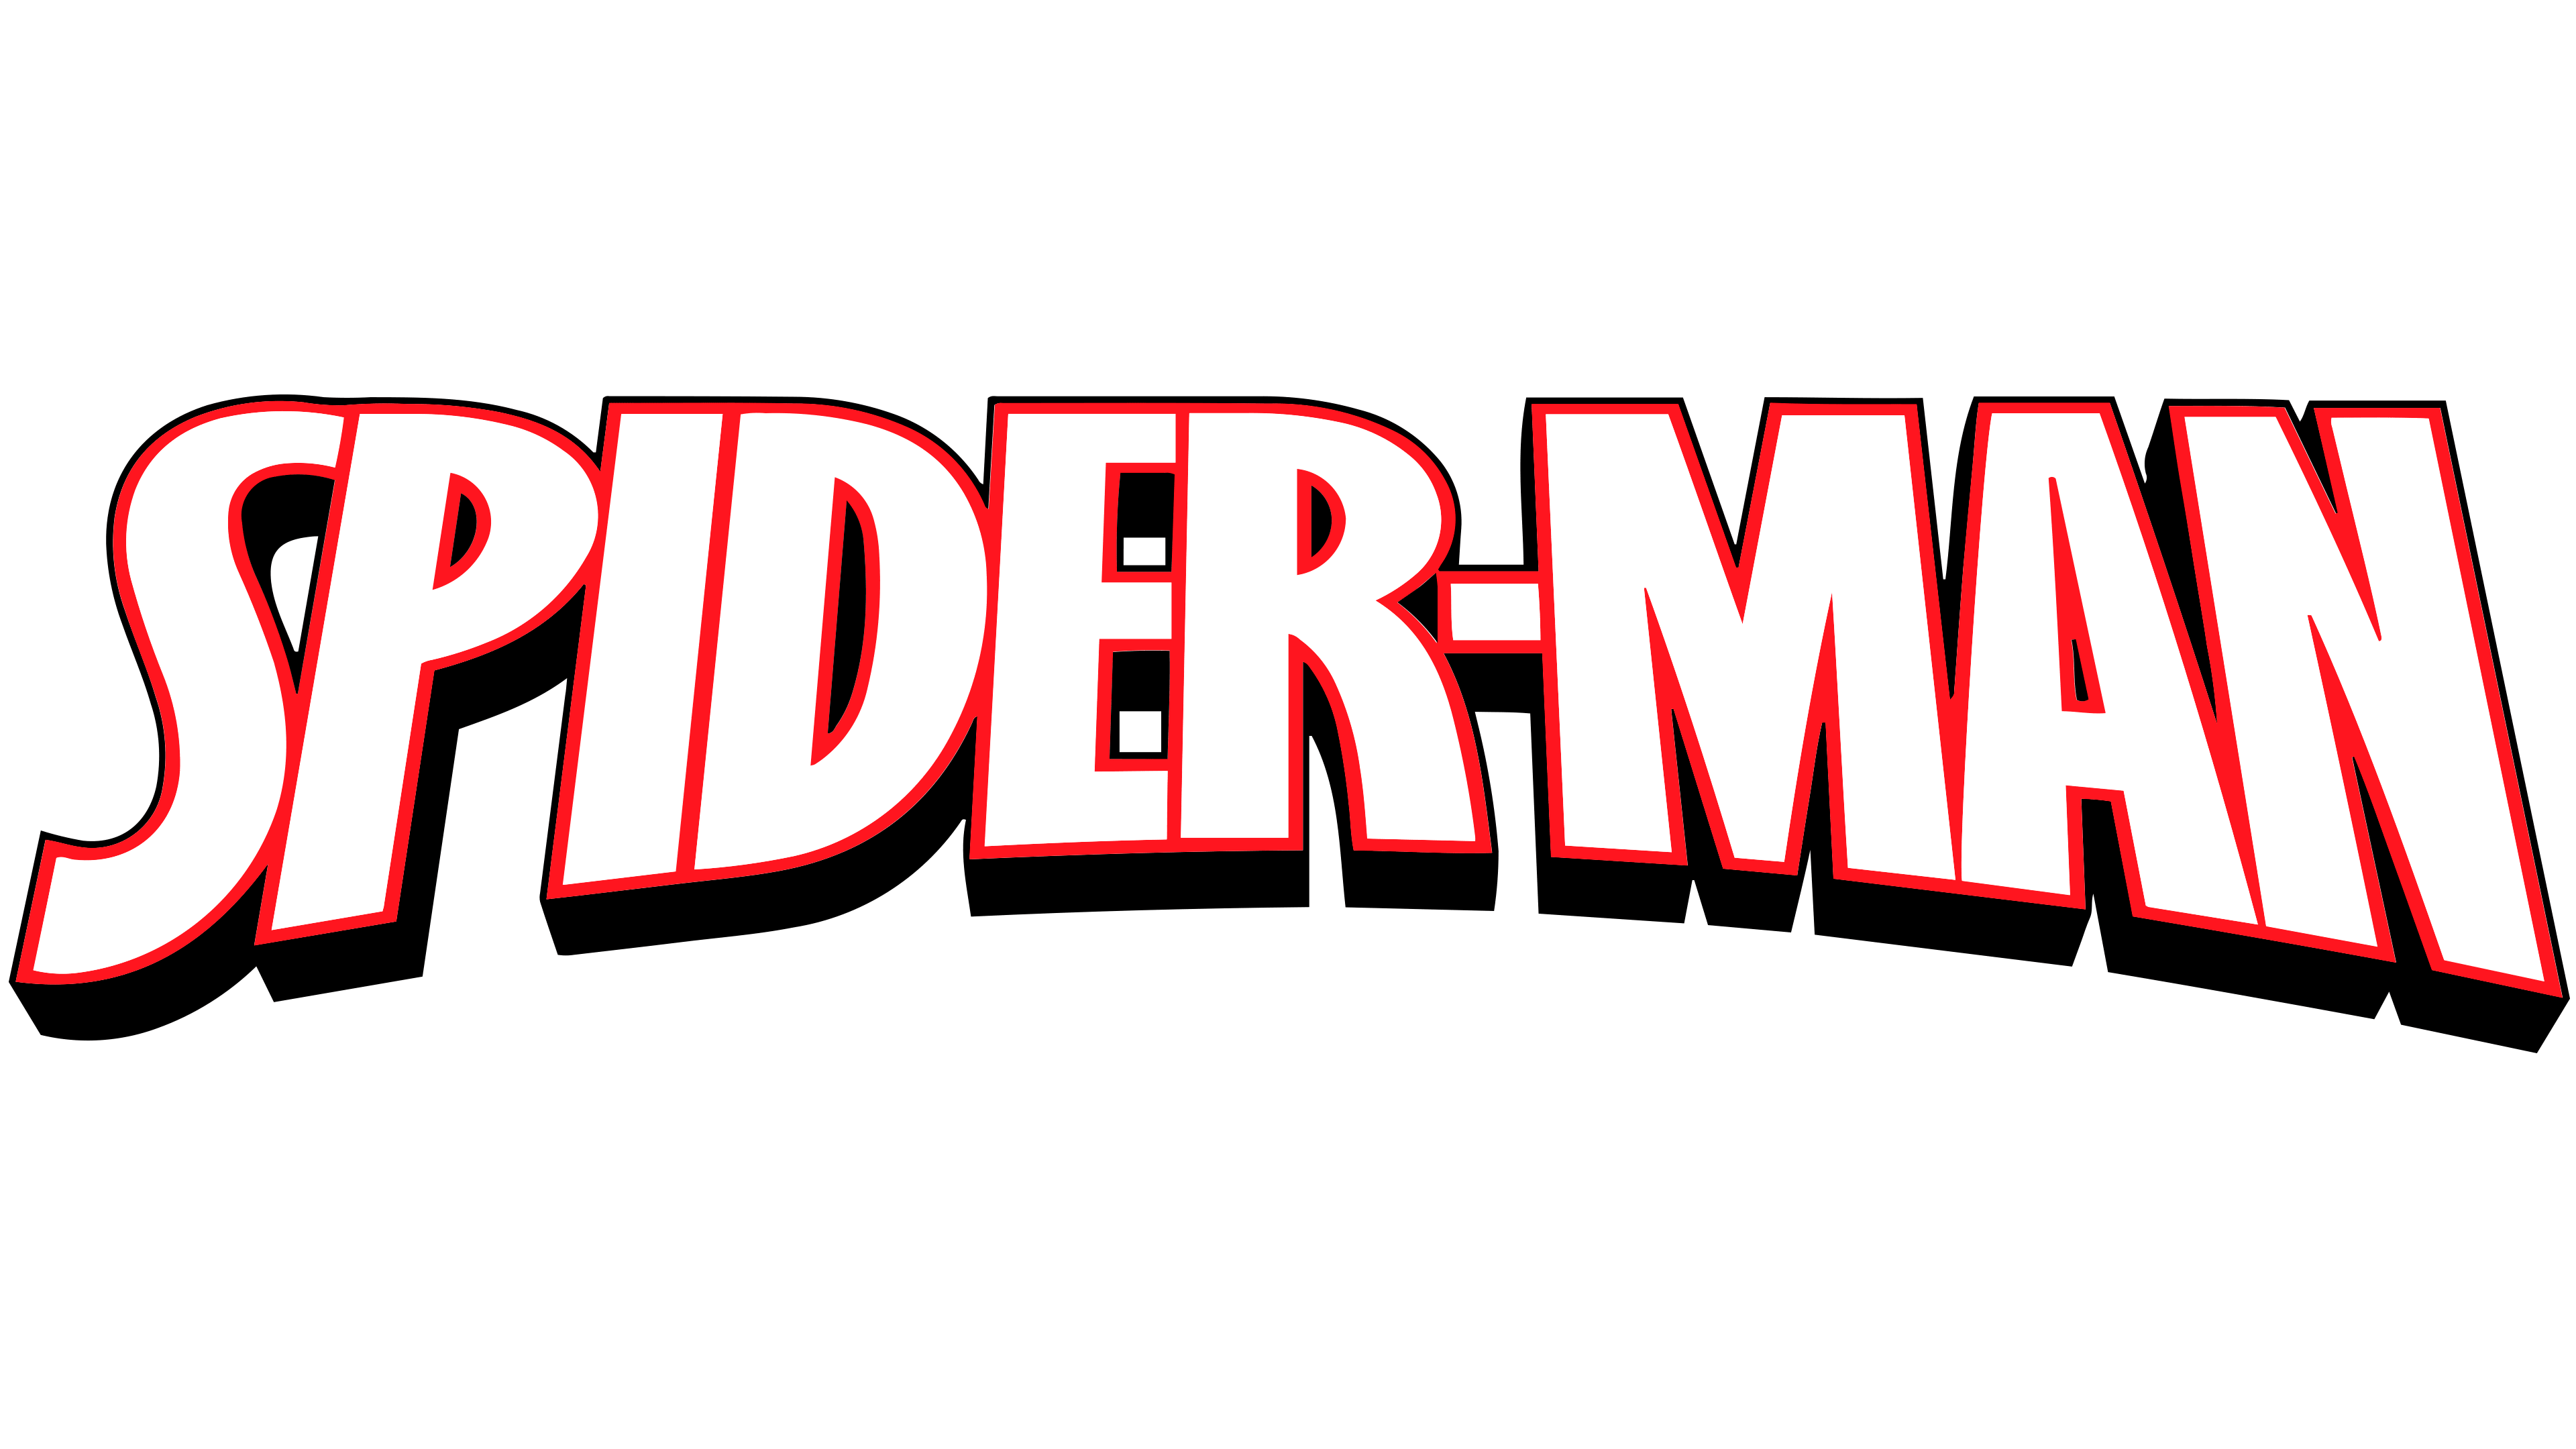 Introducir 83+ imagen marca de spiderman